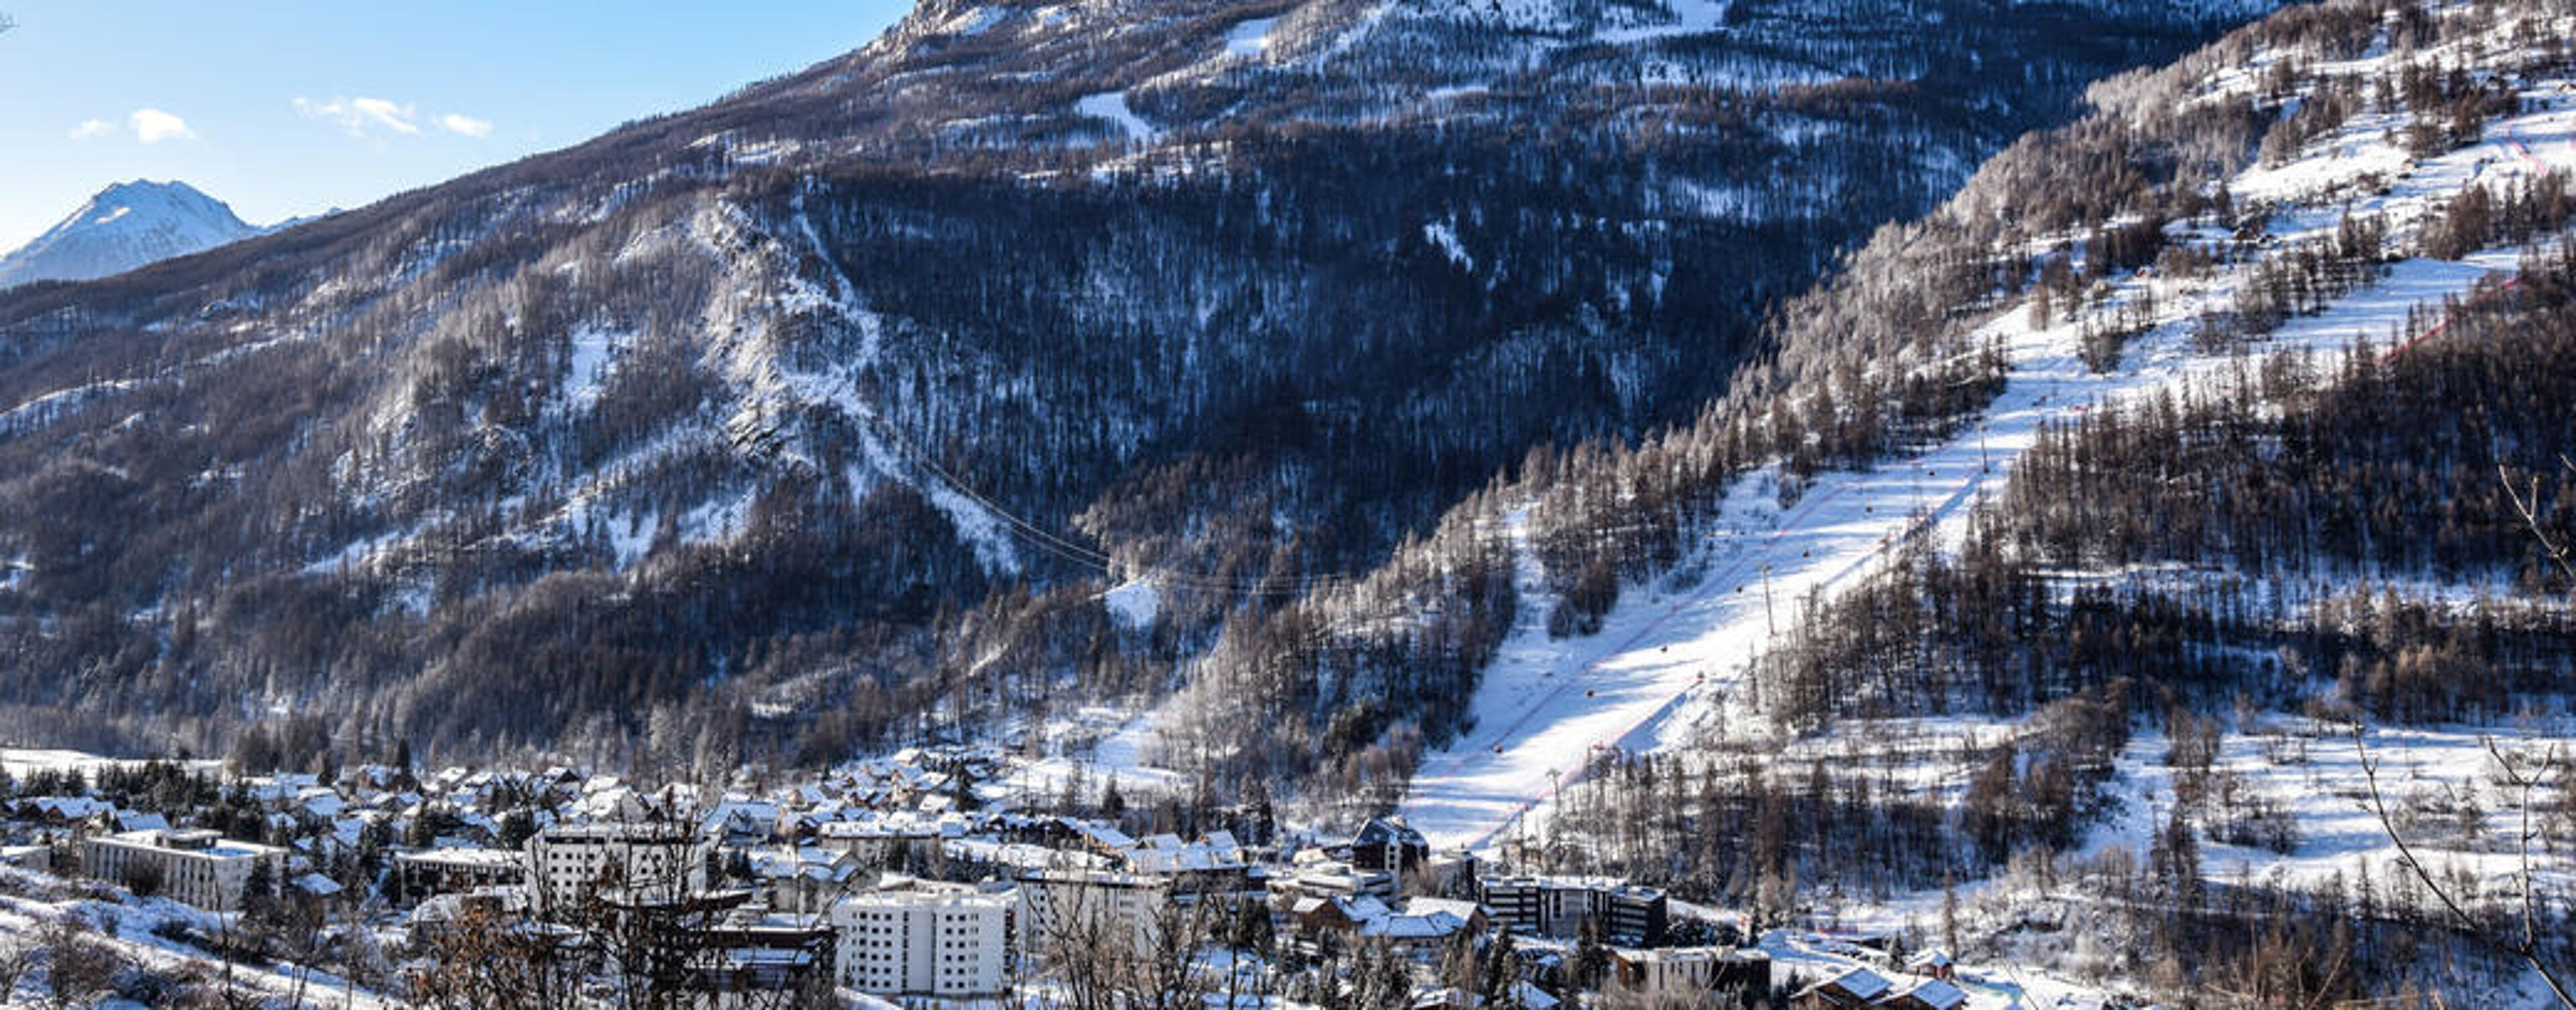 Station de ski Serre Chevalier